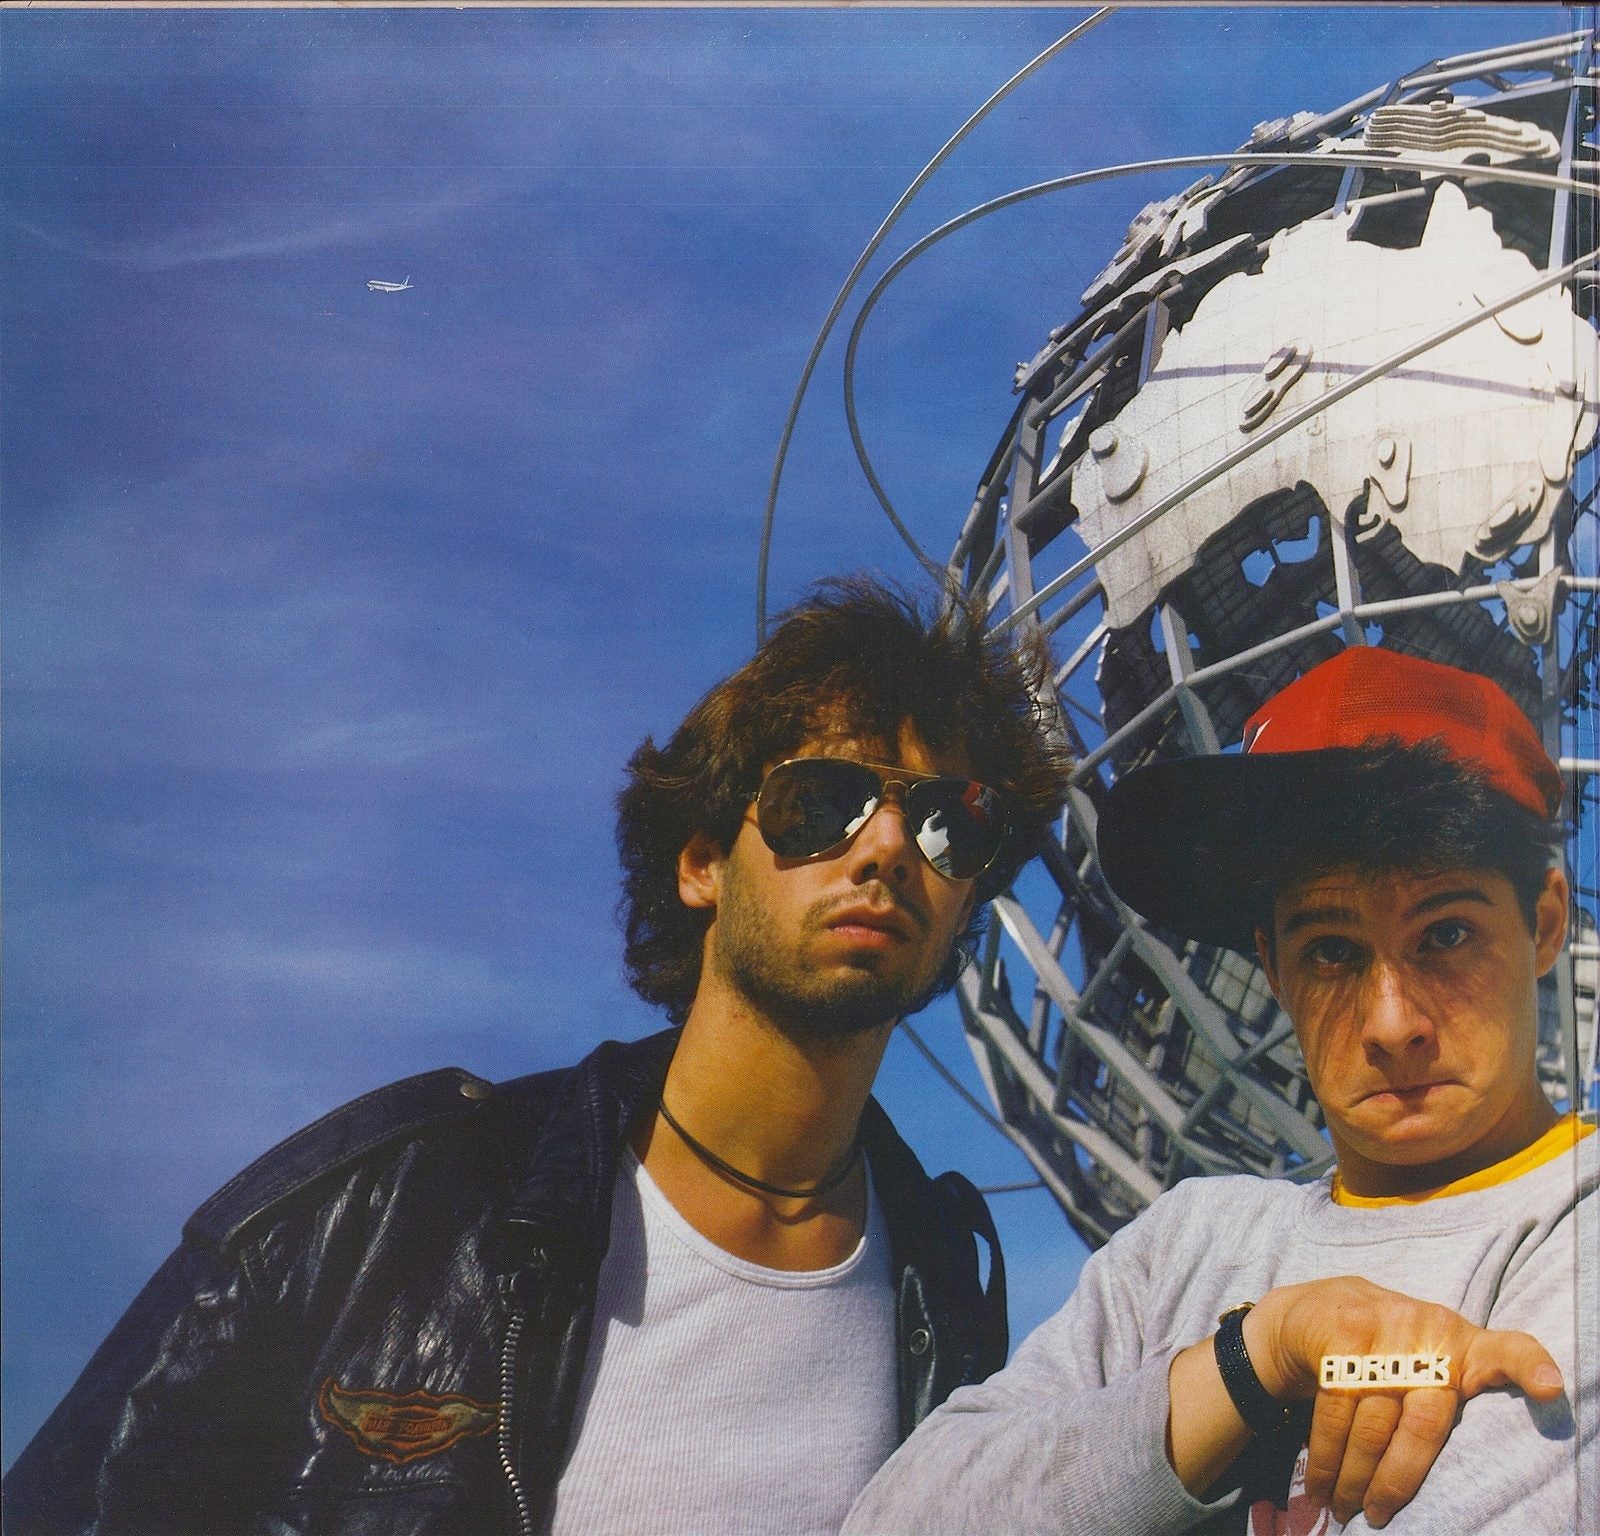 Beastie Boys - Licensed To Ill Vinyl LP UK